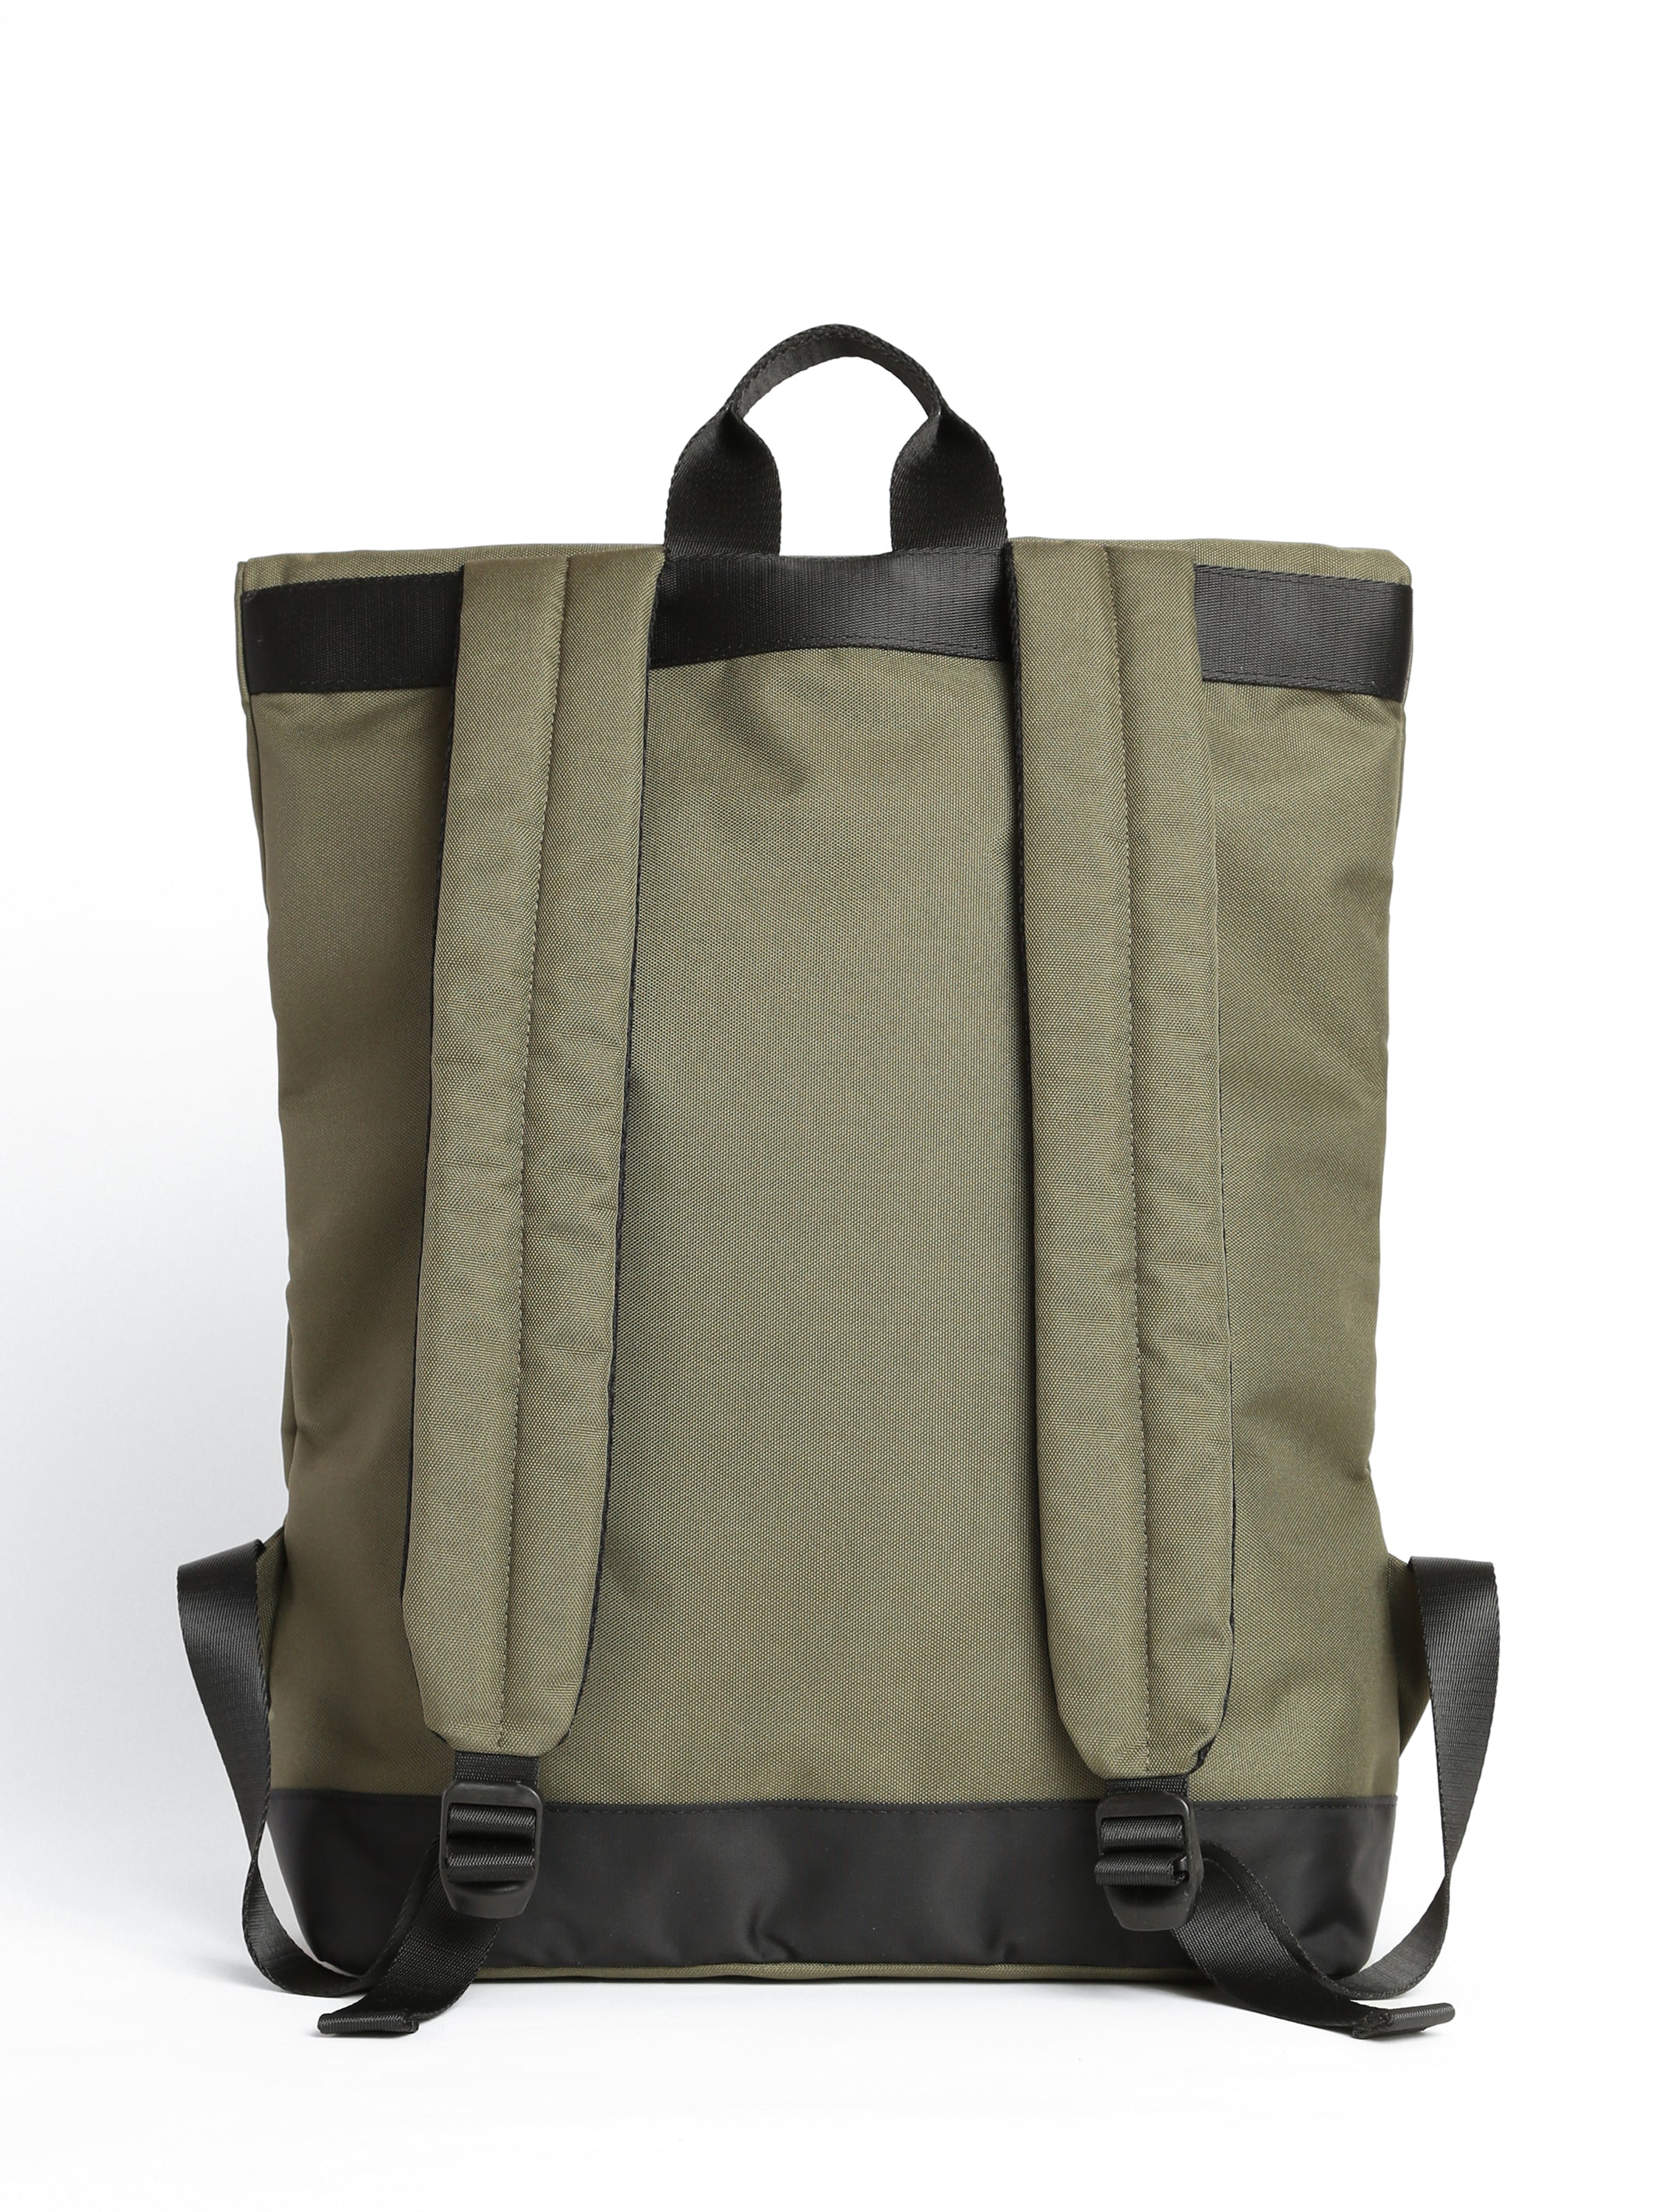 Rolltop Backpack in Khaki - BROOKLYN INDUSTRIES